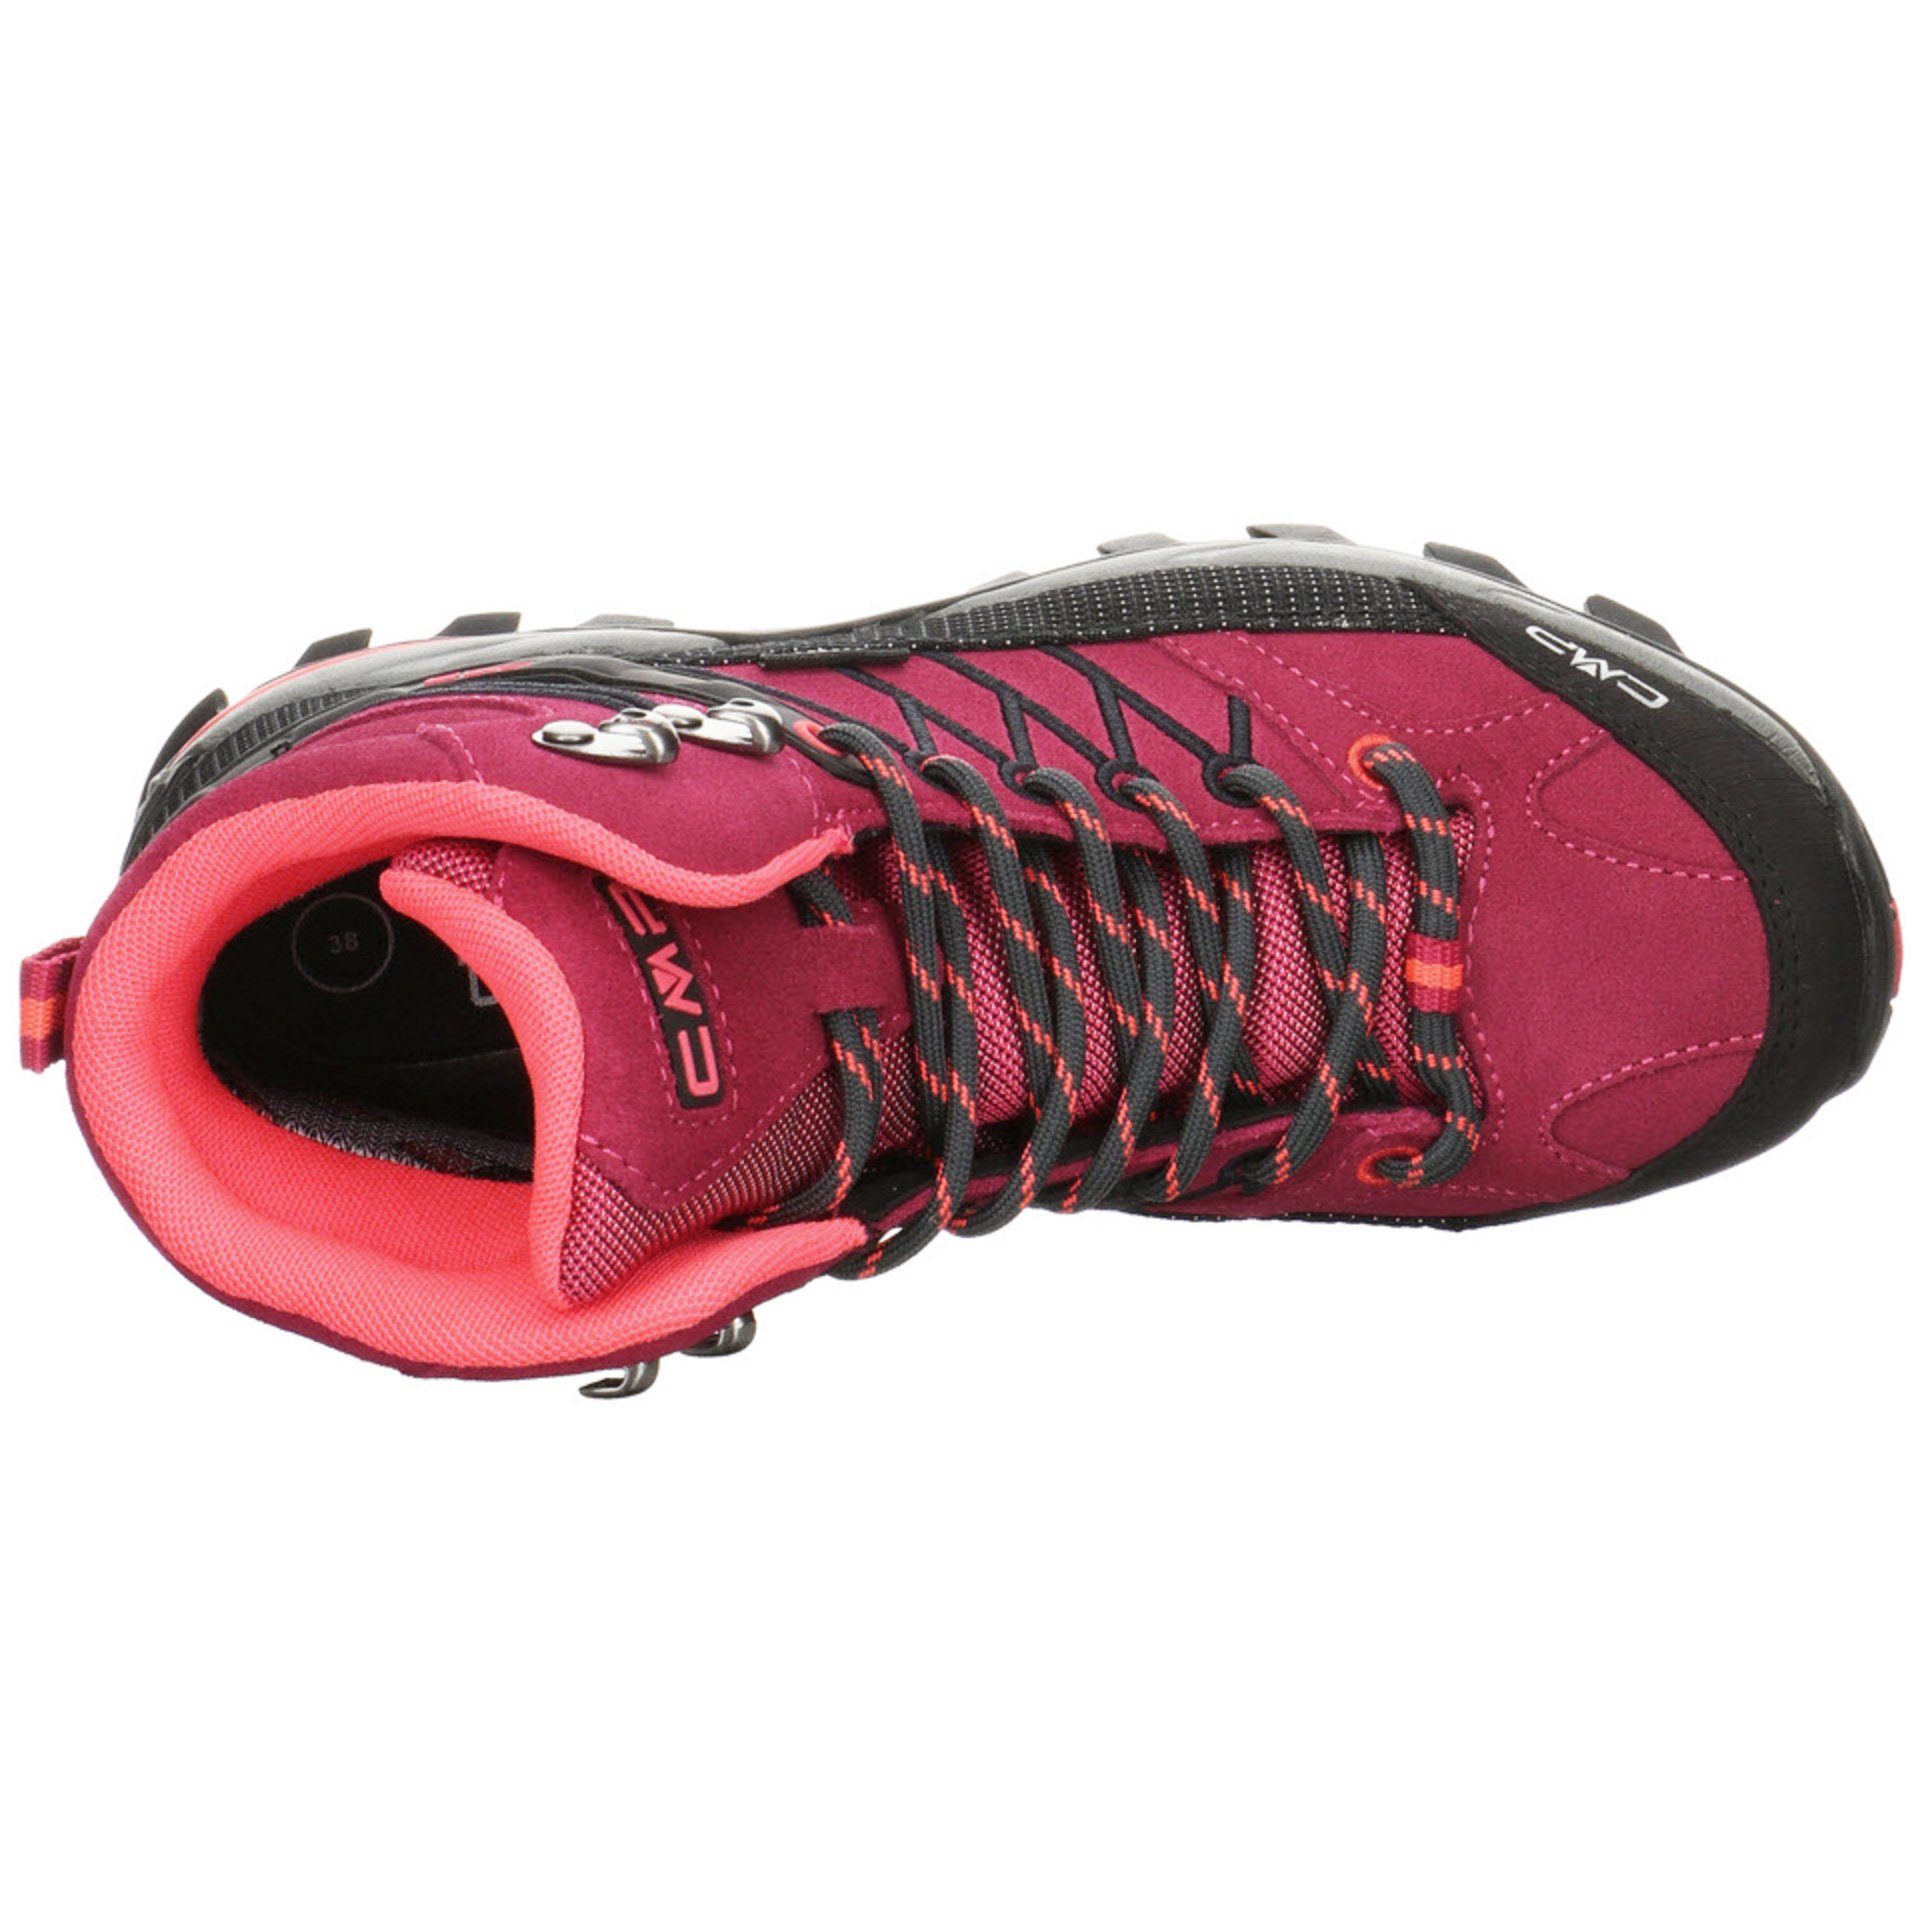 CMP Damen Outdoor MAGENTA-ANTRACITE Leder-/Textilkombination Outdoorschuh Rigel Mid Outdoorschuh Schuhe